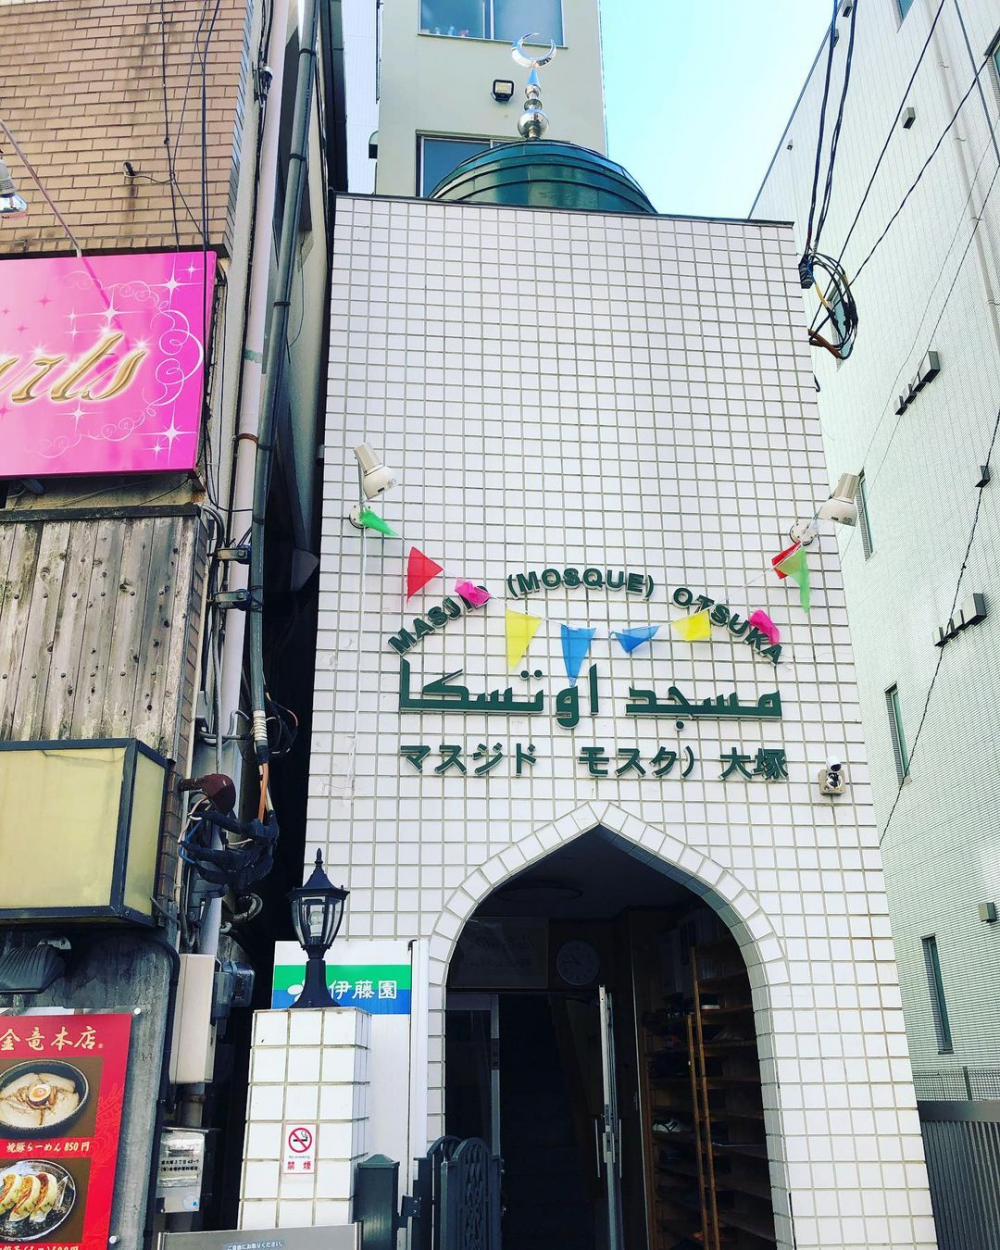 Wisatawan Muslim Bisa Kunjungi 5 Wisata Masjid Tokyo Yang Unik Ini 3